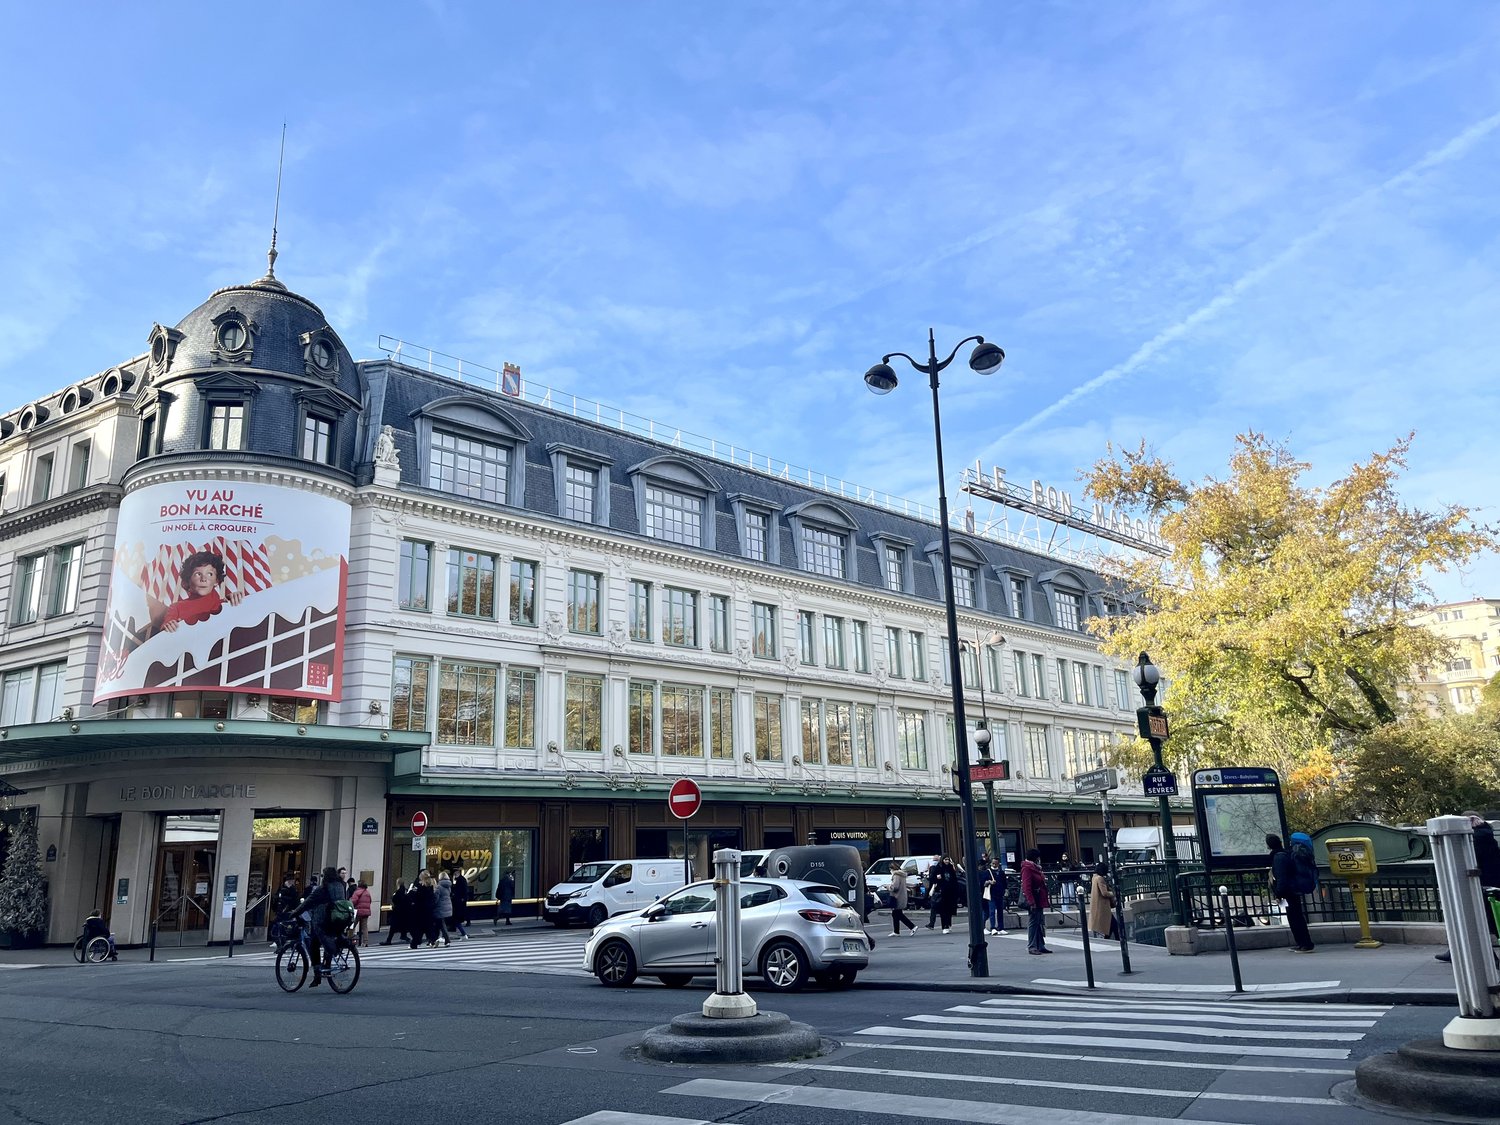 Paris - September 10, 2019 : the Louis Vuitton Luxury Store on